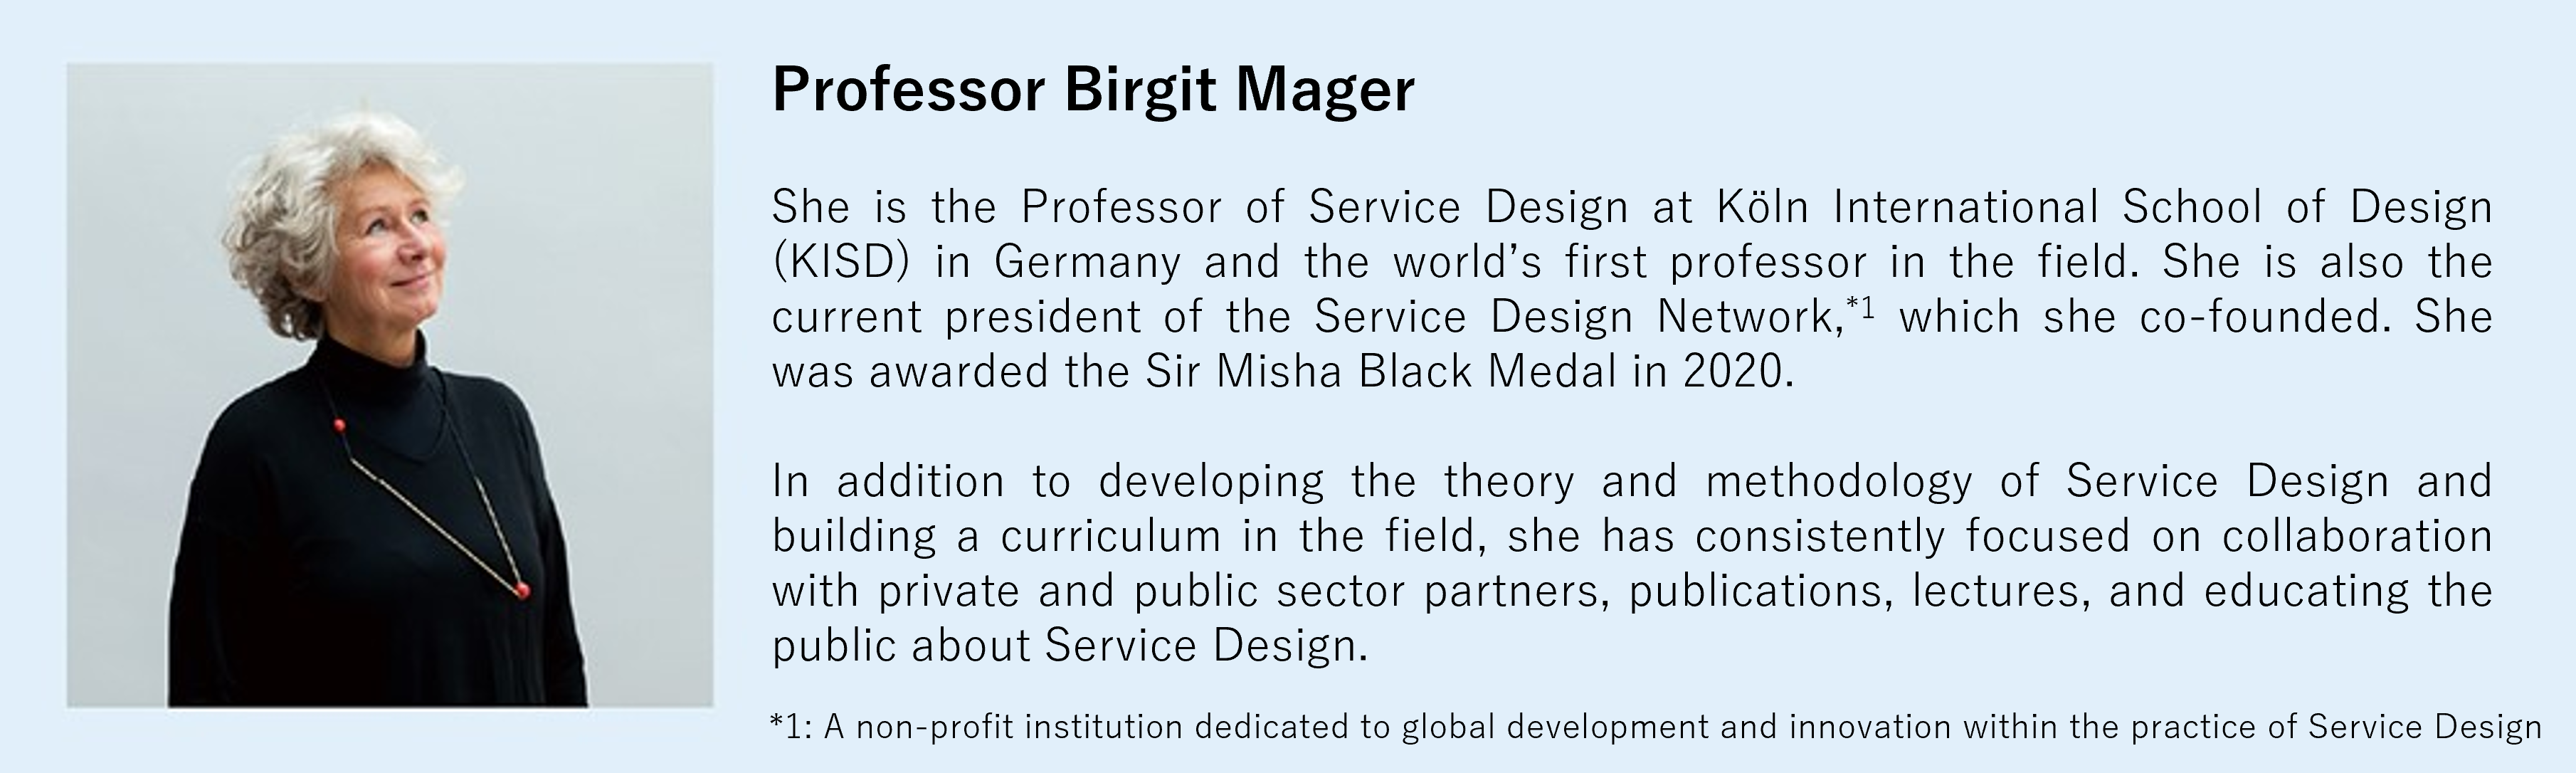 About Professor Birgit Mager